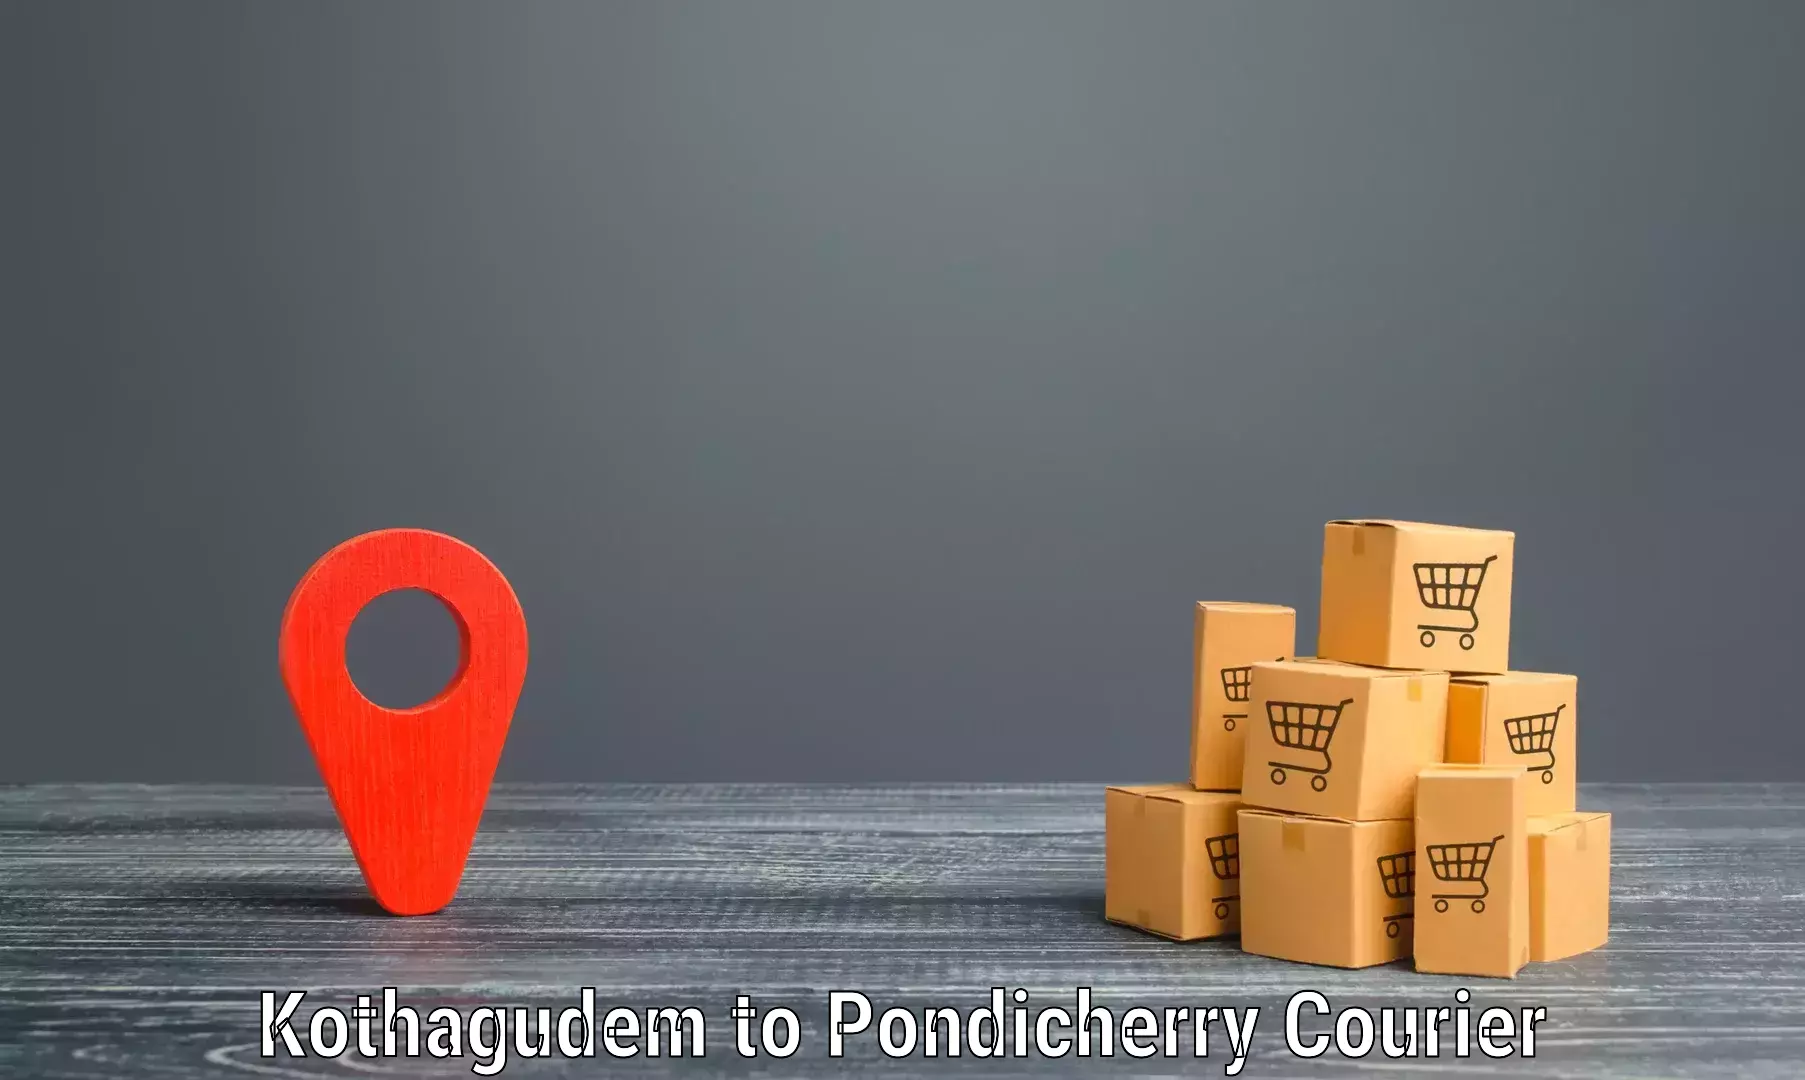 Global logistics network Kothagudem to Pondicherry University